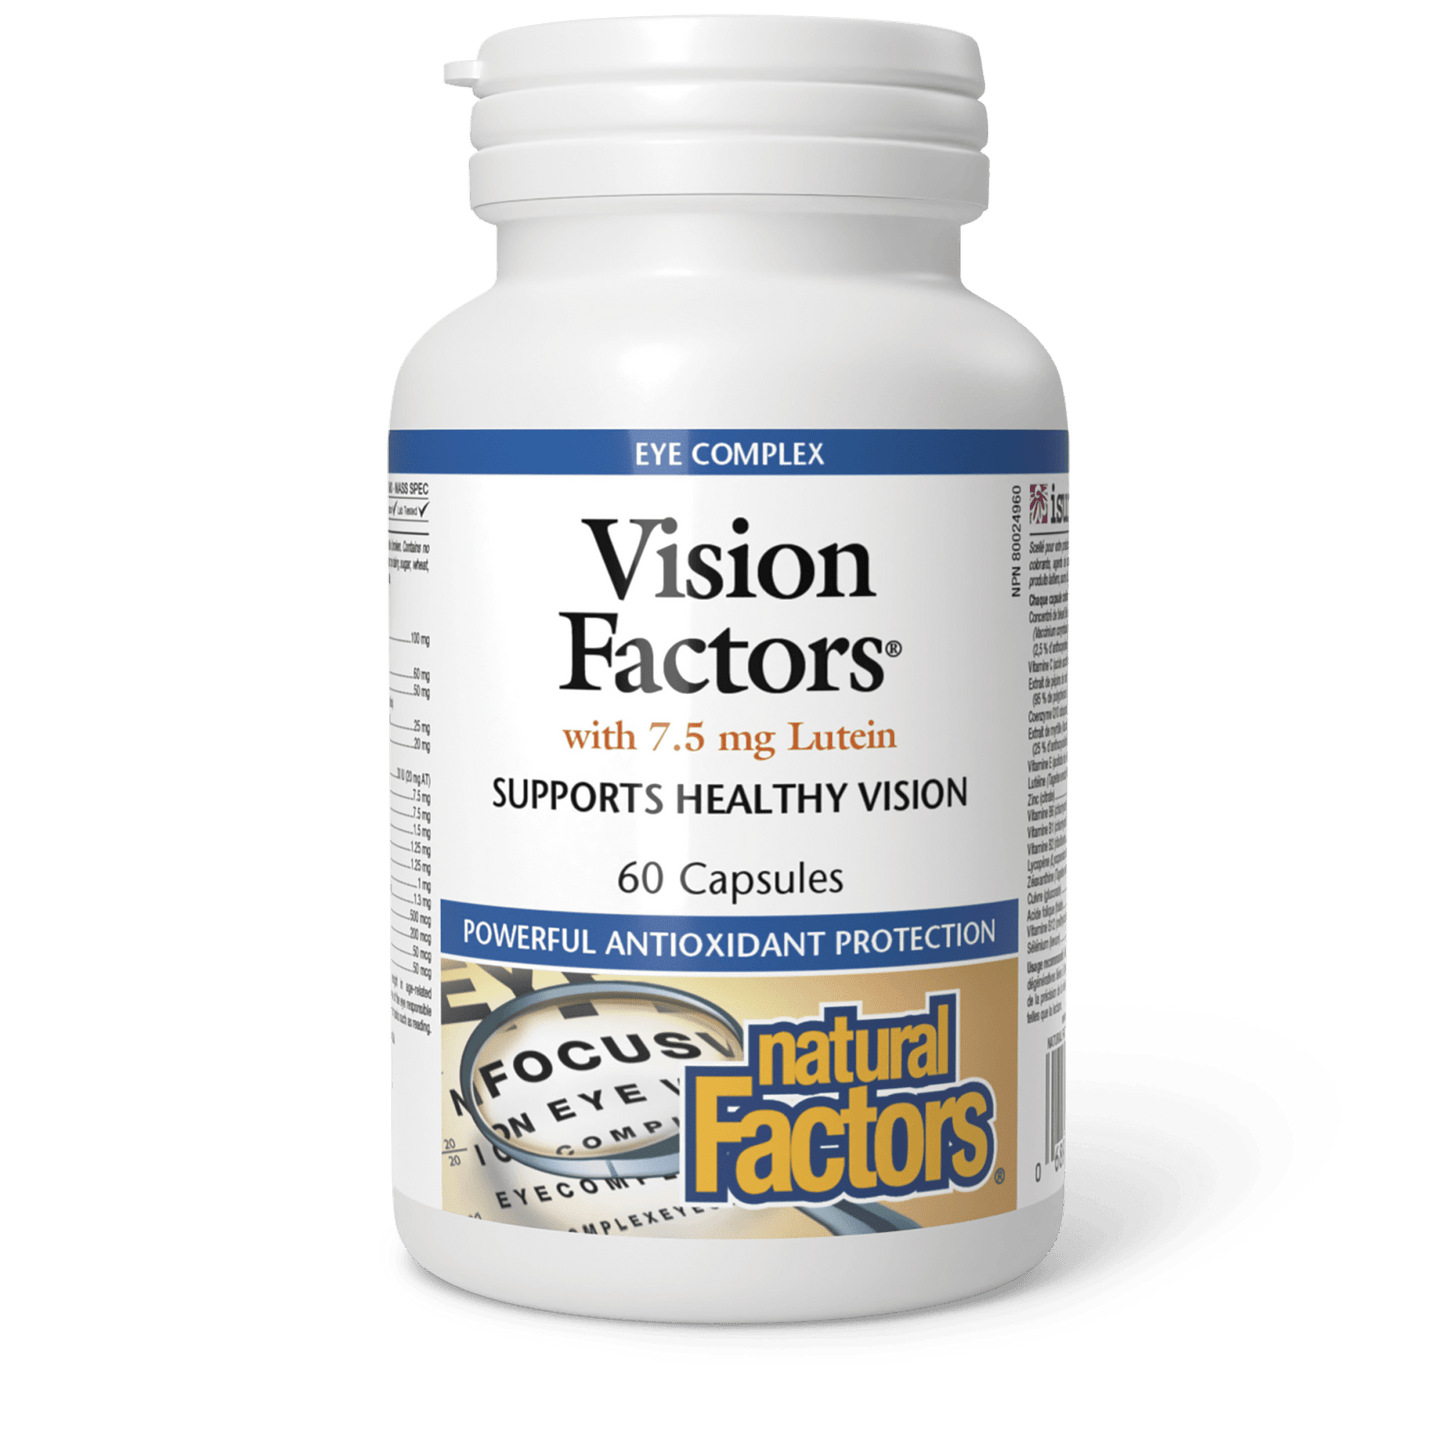 Vision Factors with 7.5 mg Lutein, Natural Factors|v|image|3534